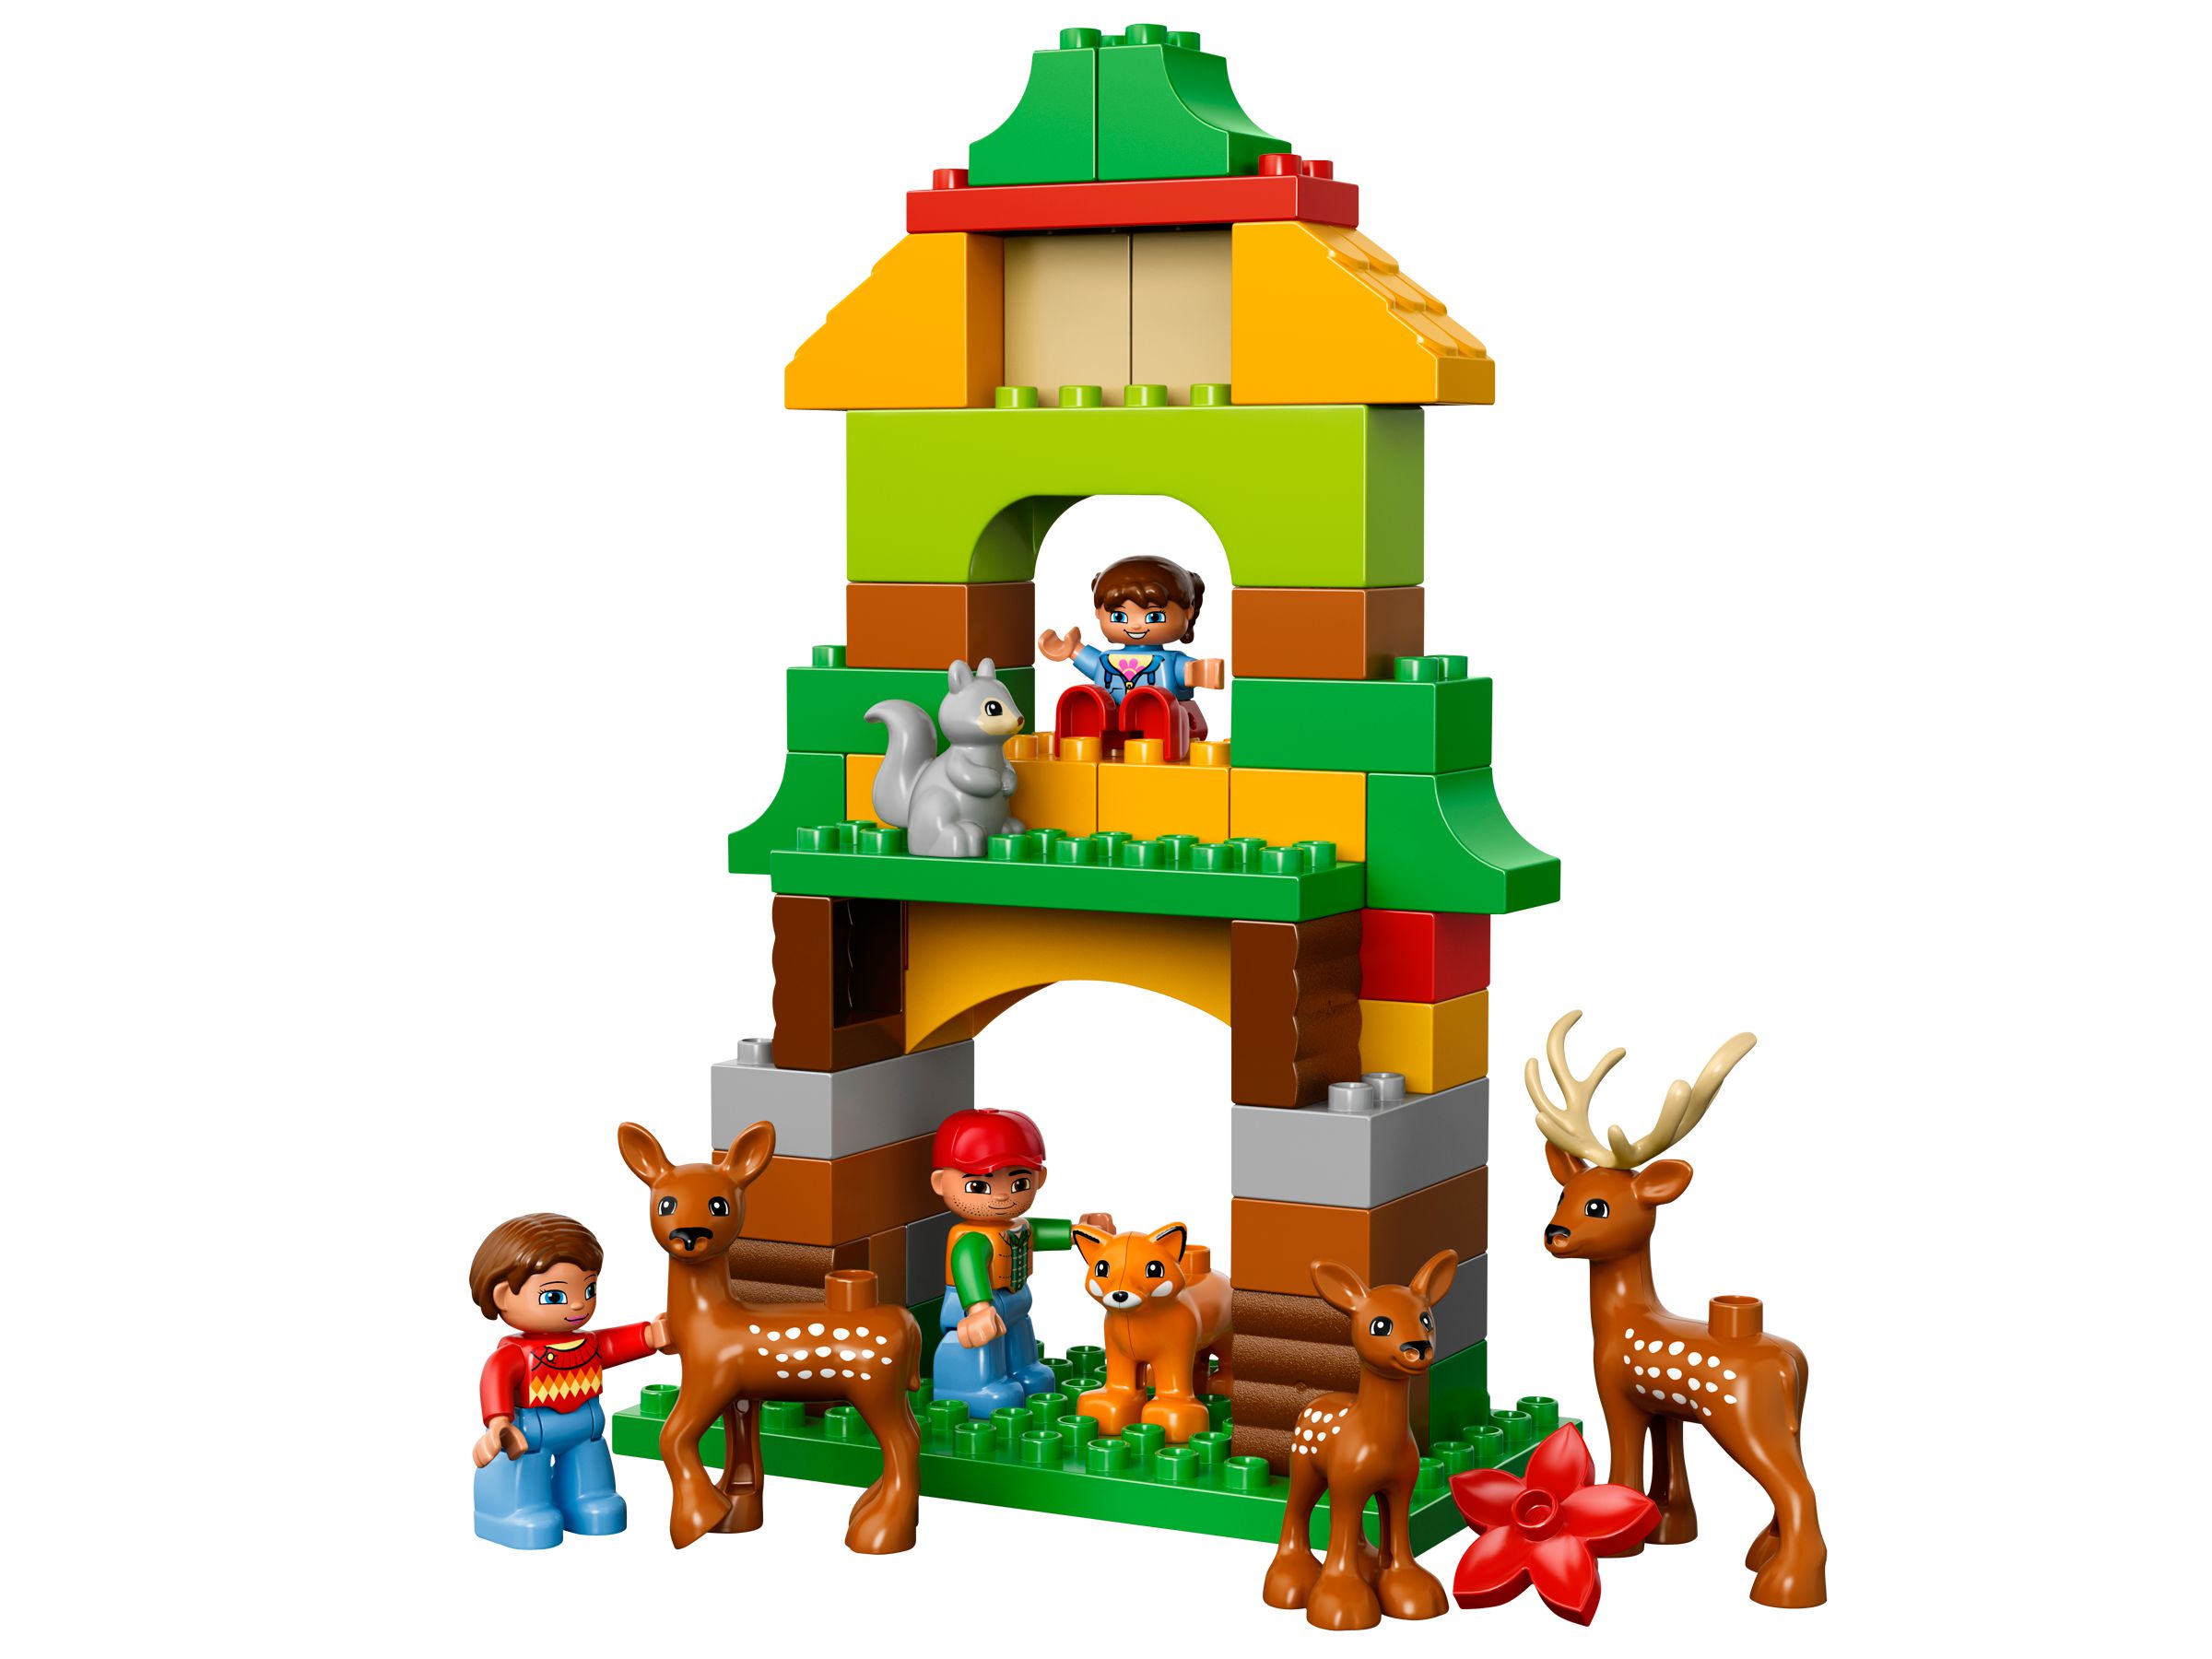 LEGO Duplo 10584 Wildpark LEGO_10584_alt3.jpg